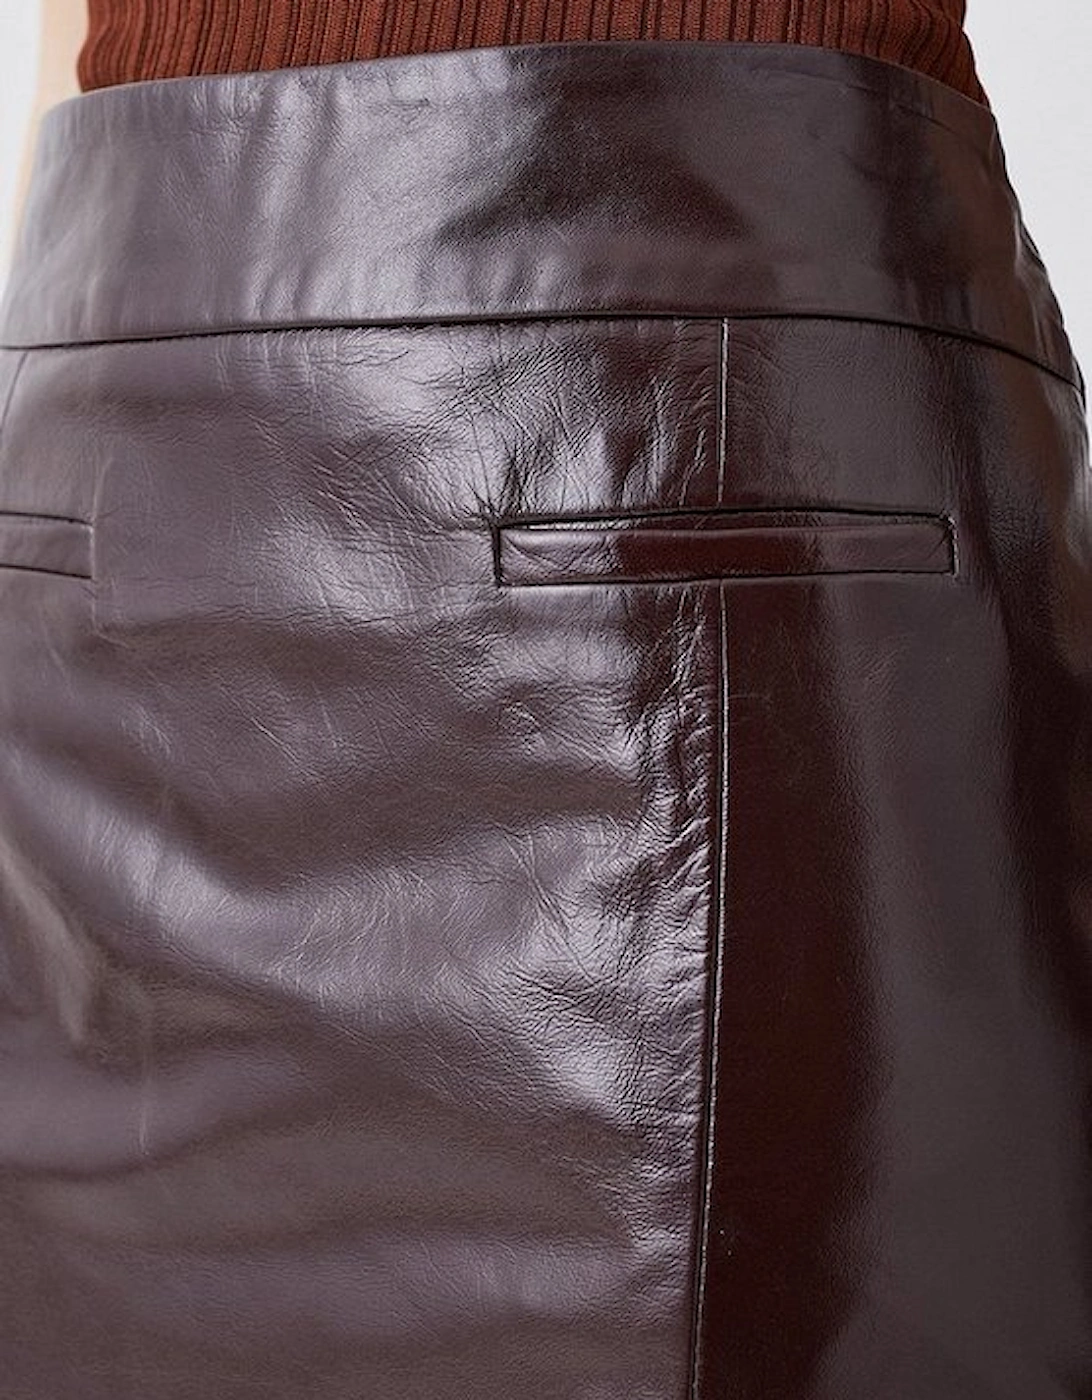 Patent Leather Mini Skirt